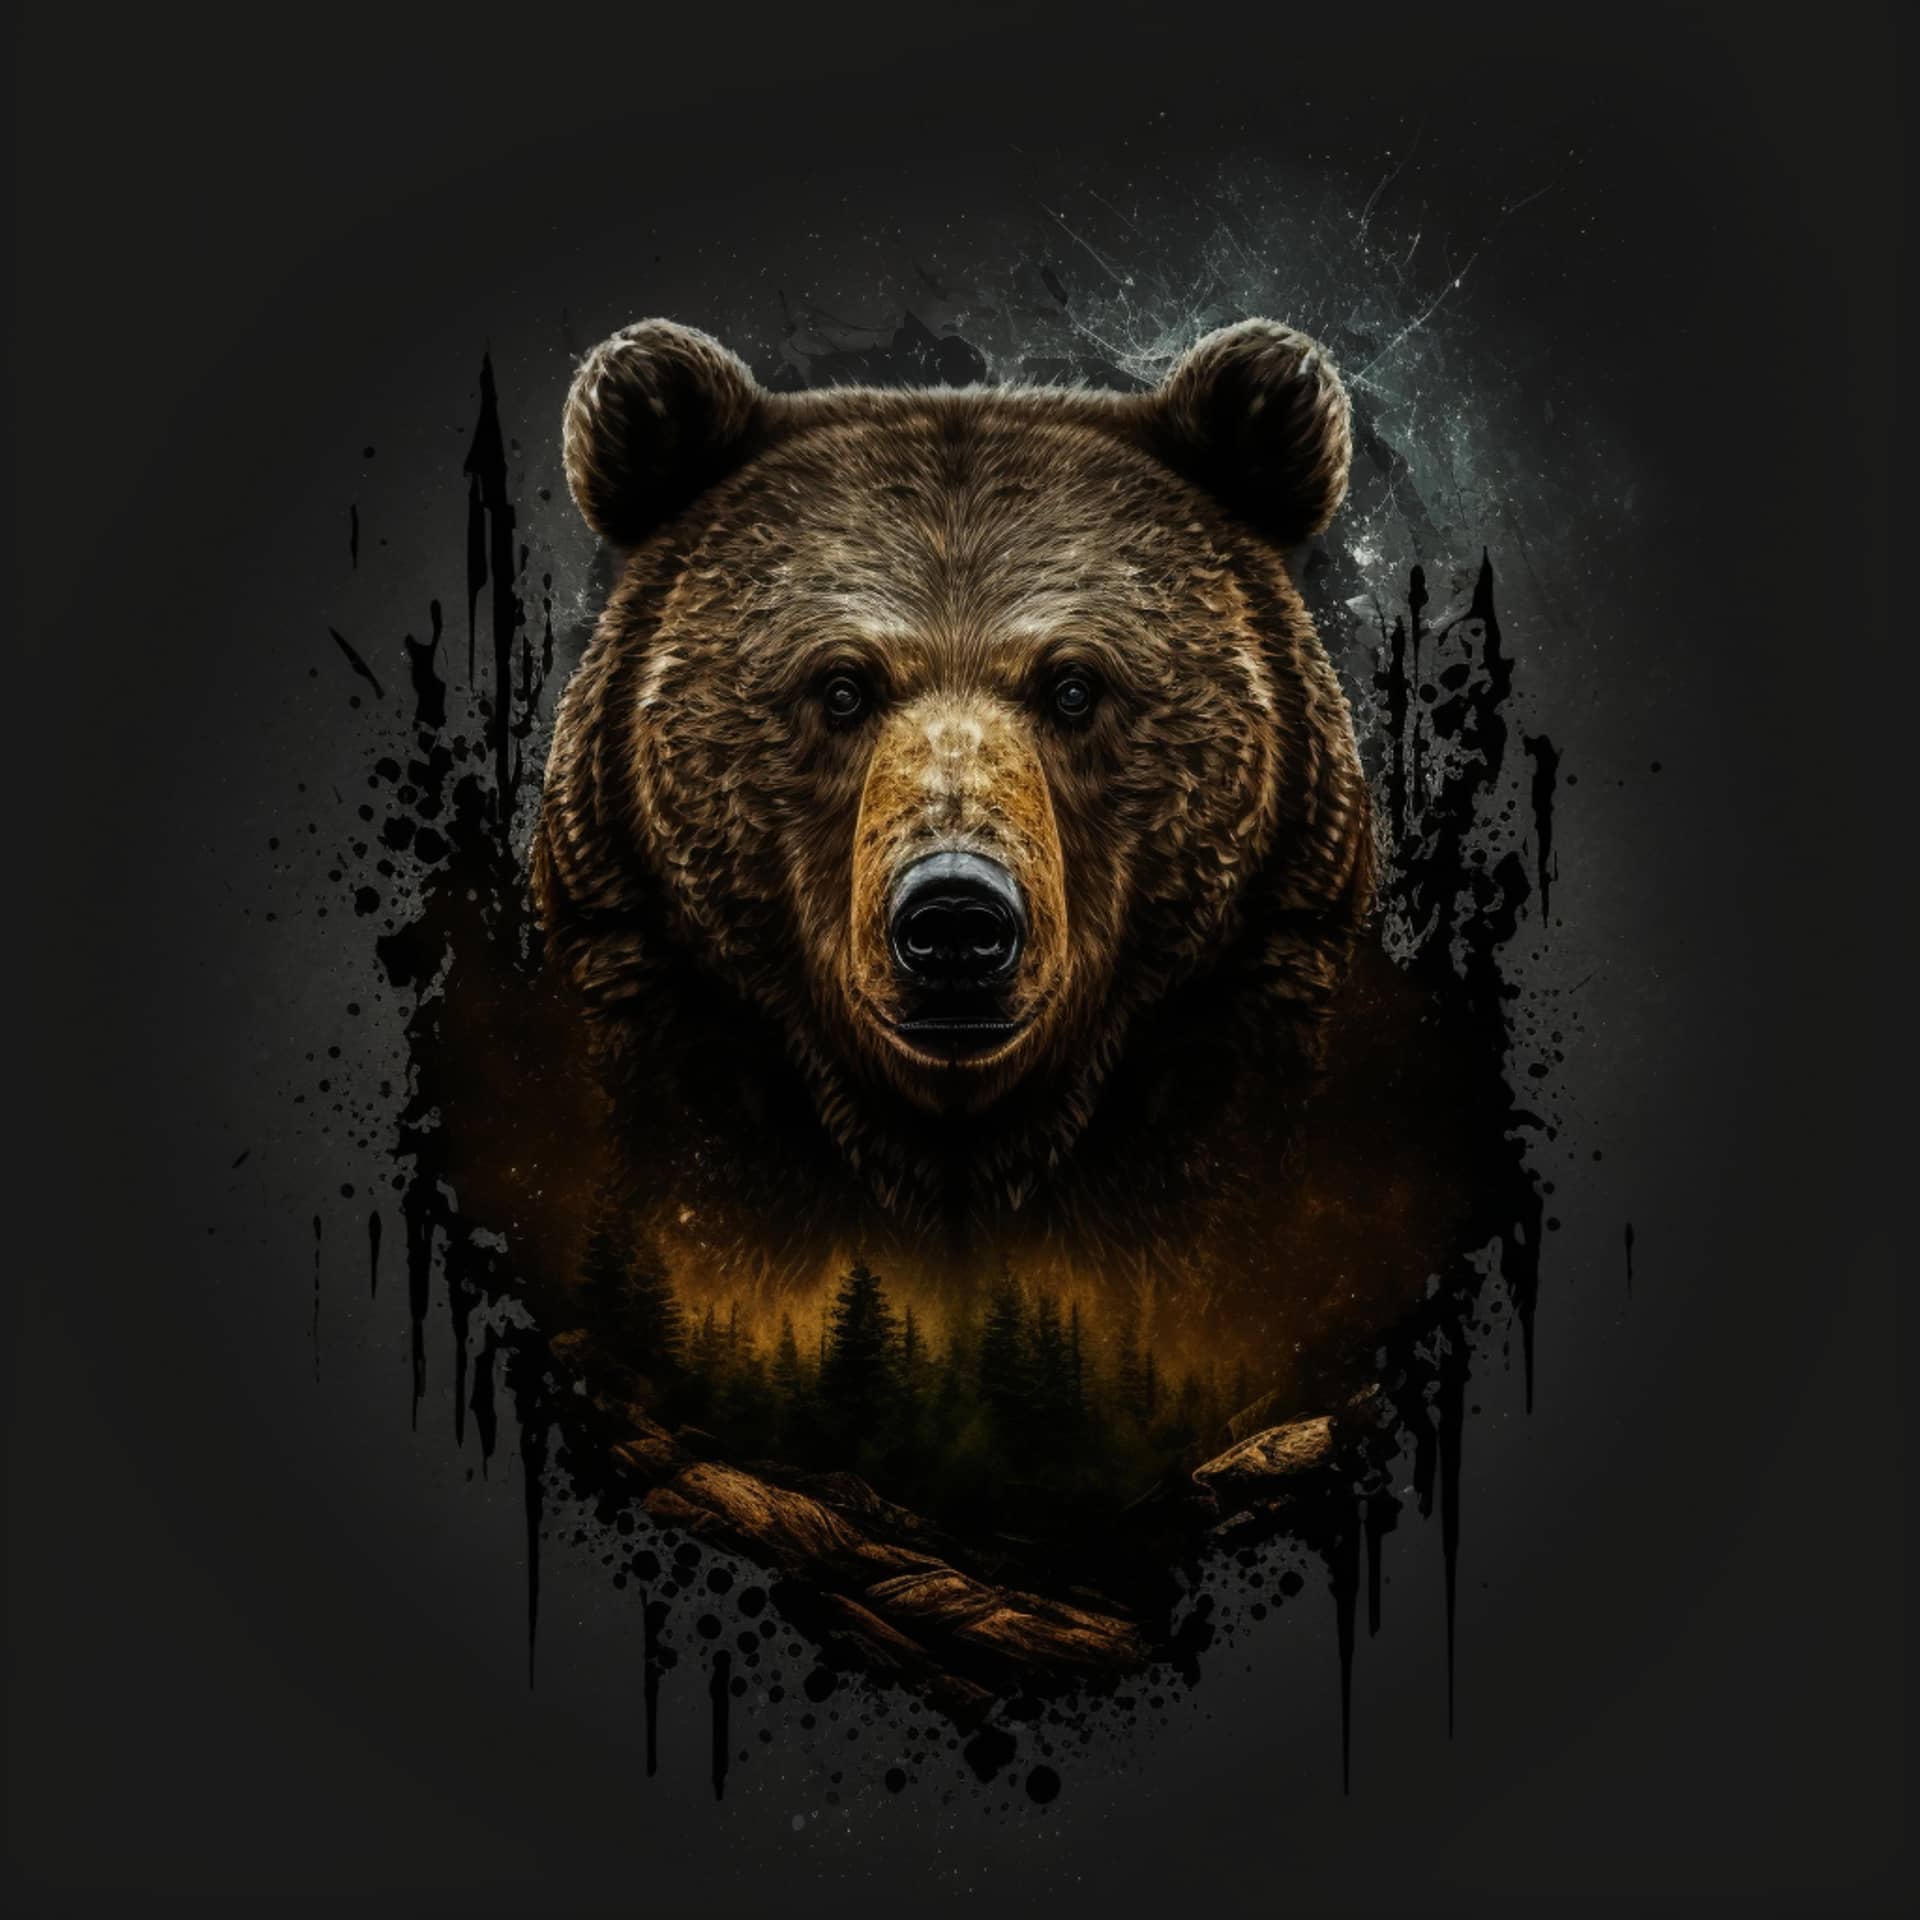 Cool bear illustration design excellent picture